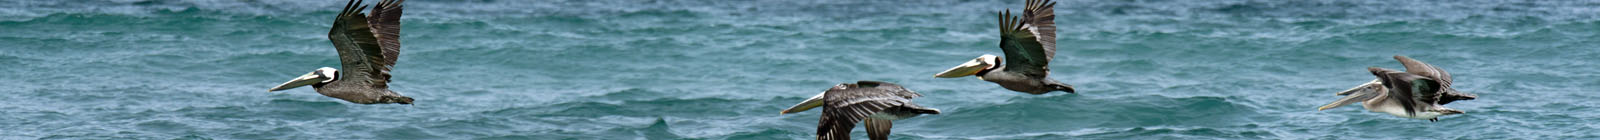 Pelicans morning La Ribera, Baja California Sur - Banner